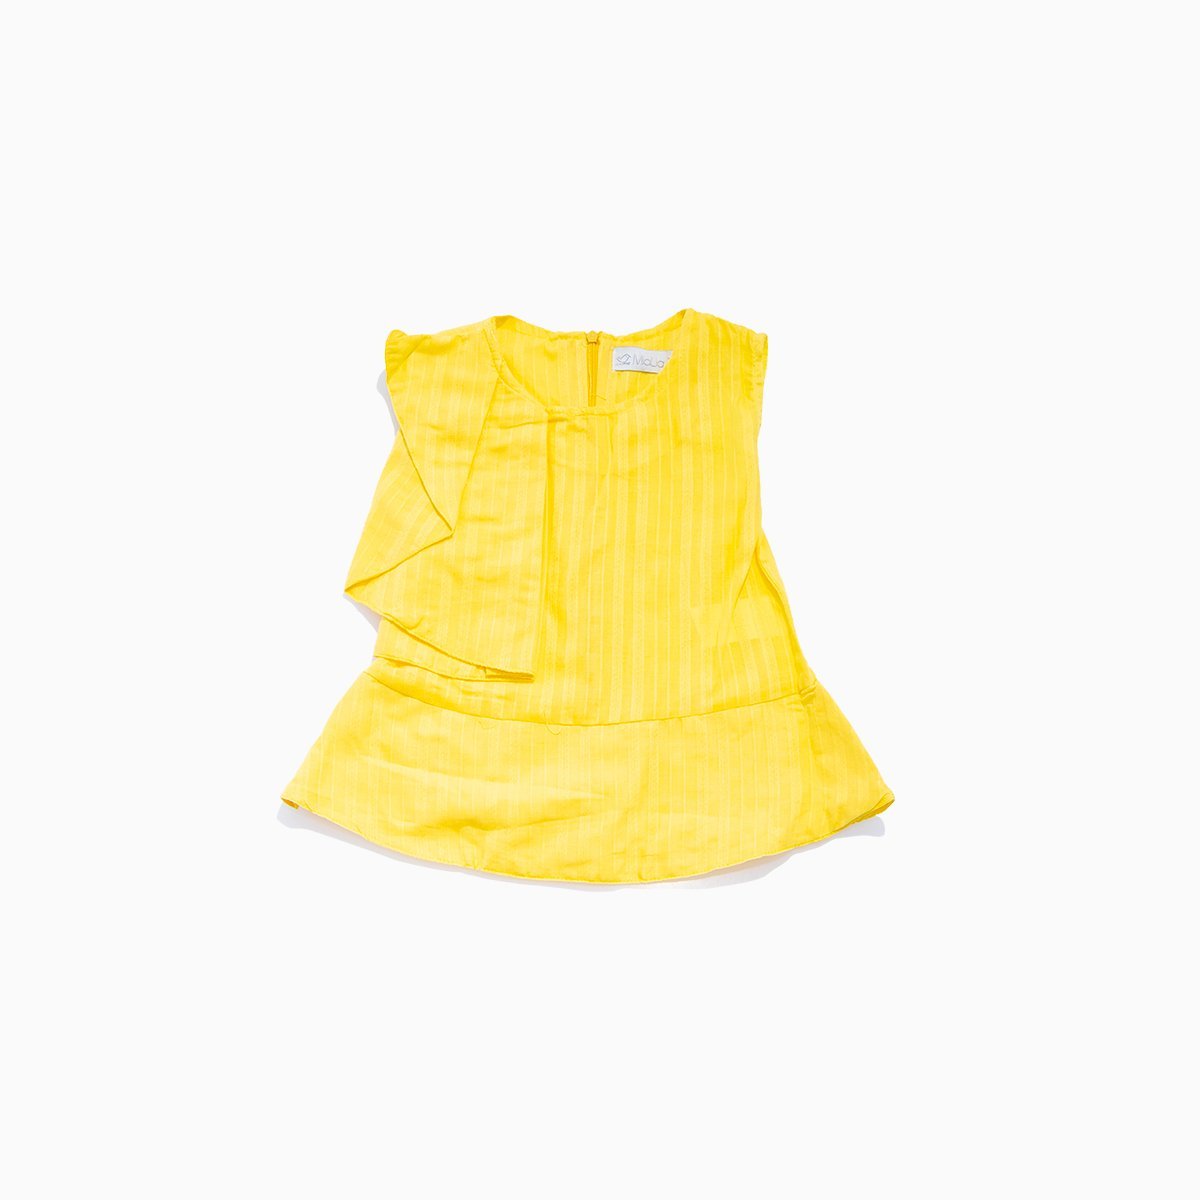 Jeans Jacket Top & Colorful Pants 4 Piece Girls Set - Yellow & Orange KIDS WEAR Mialia 